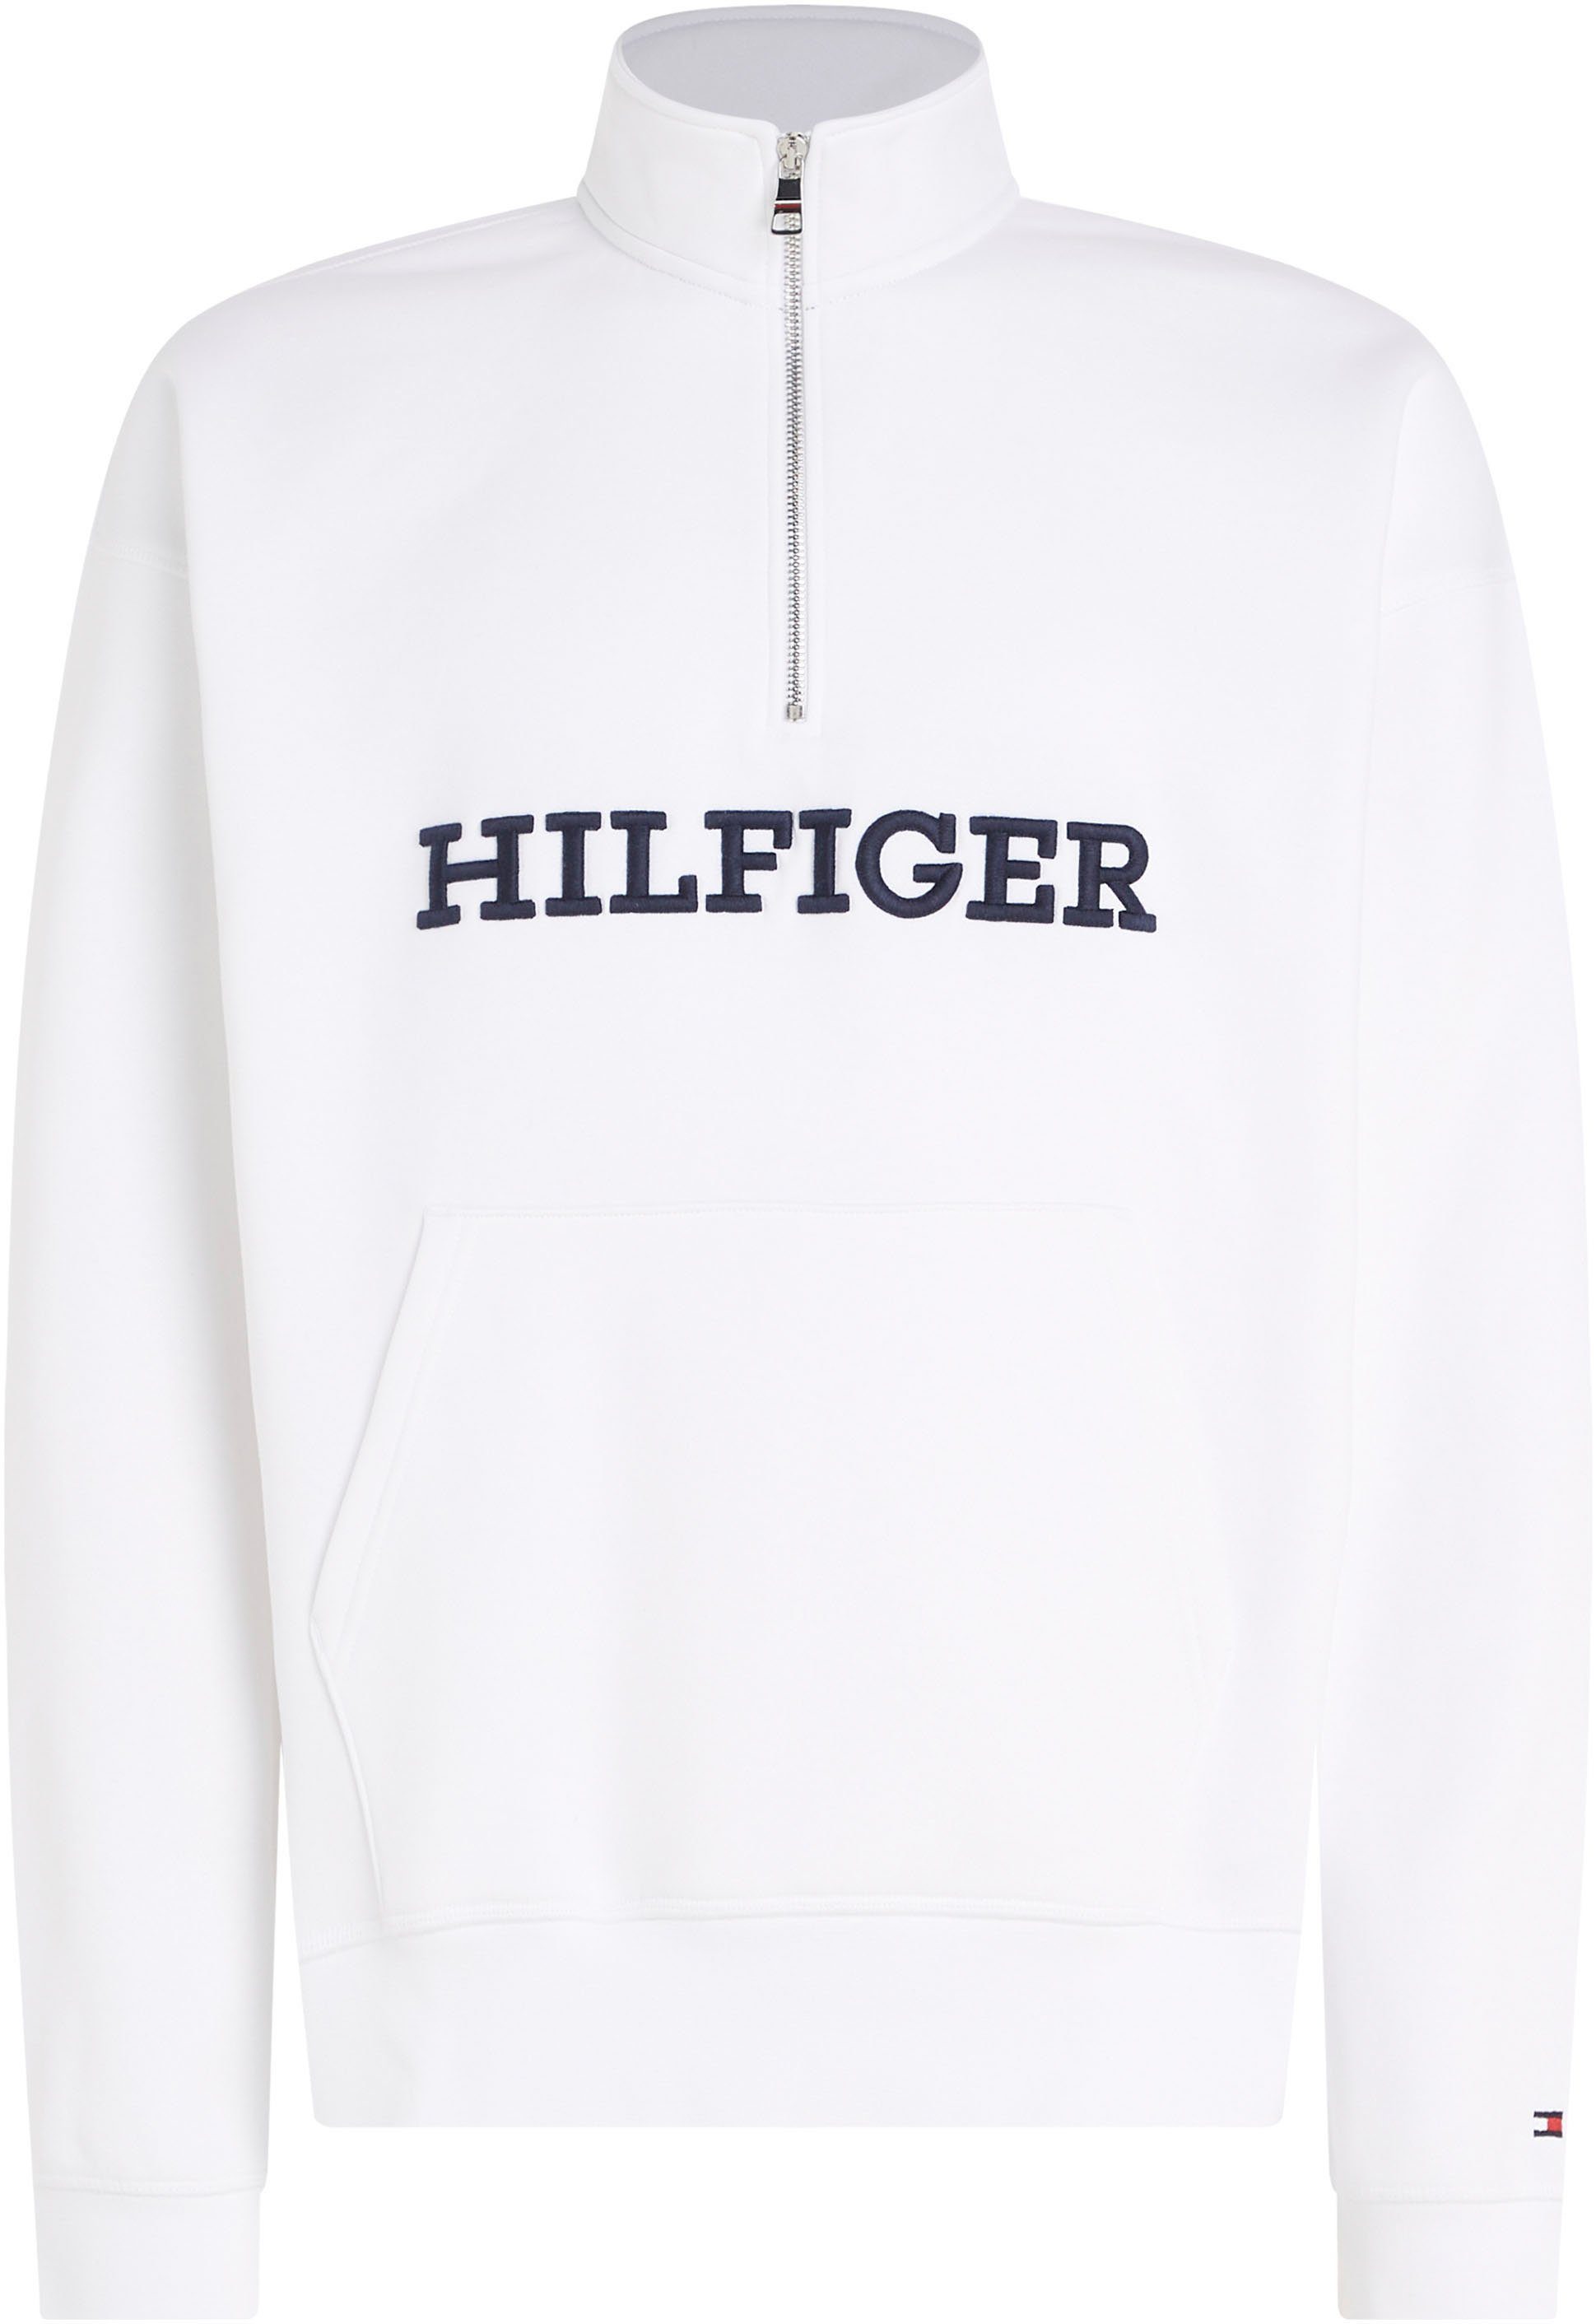 Tommy Hilfiger Sweatshirt MONOTYPE White NECK EMBRO MOCK